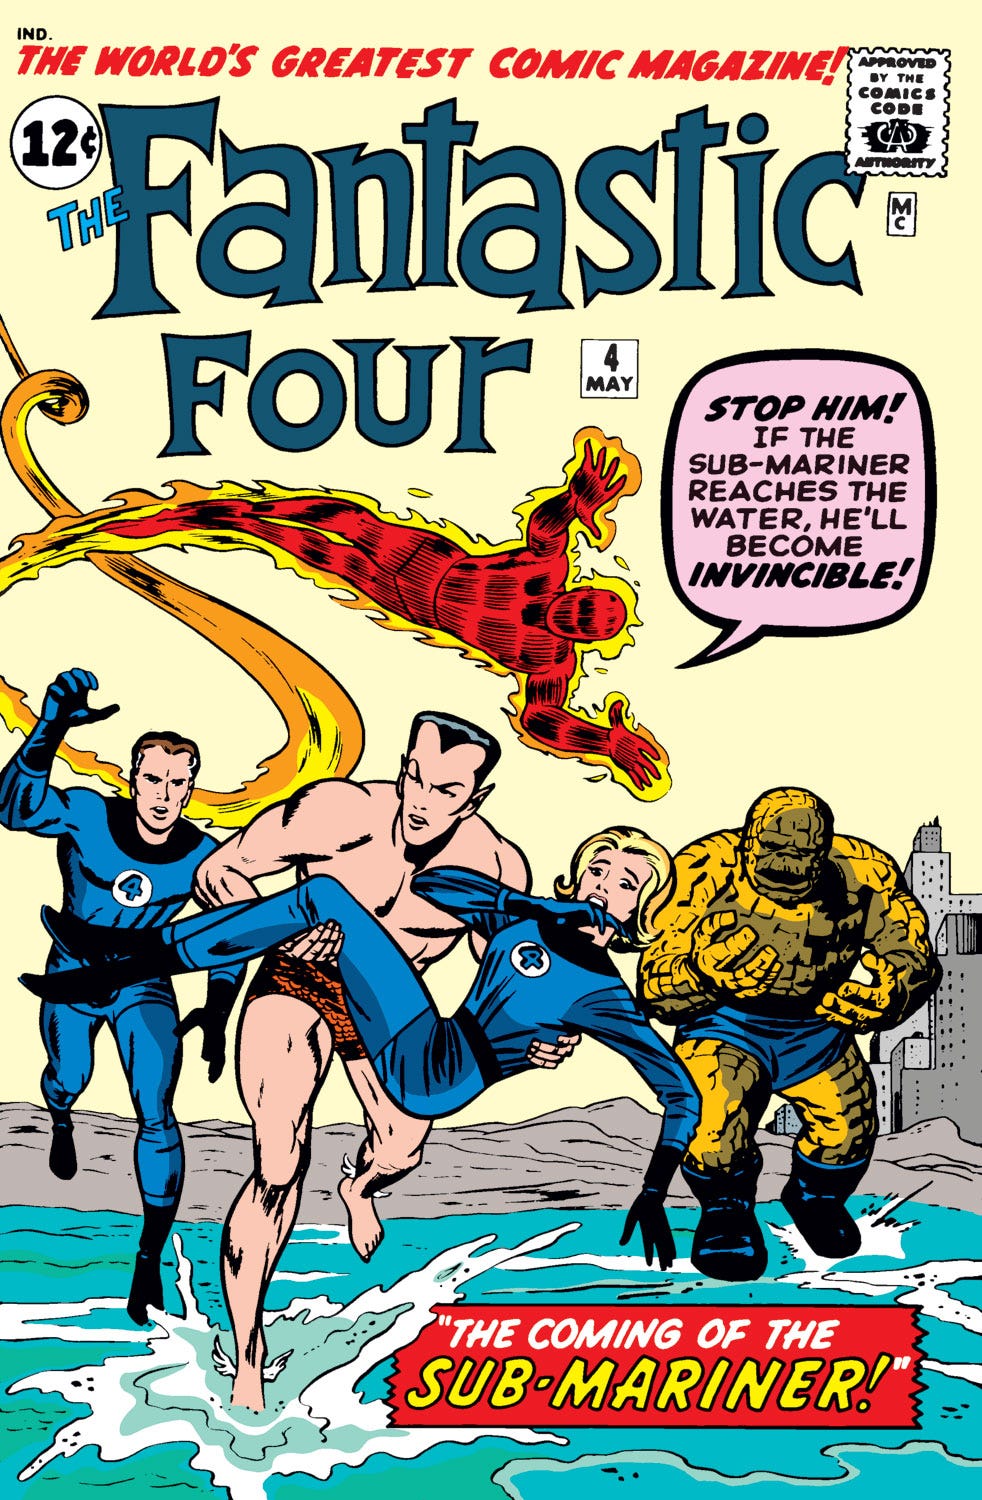 Fantastic Four (1961) #4 | Comic Issues | Marvel